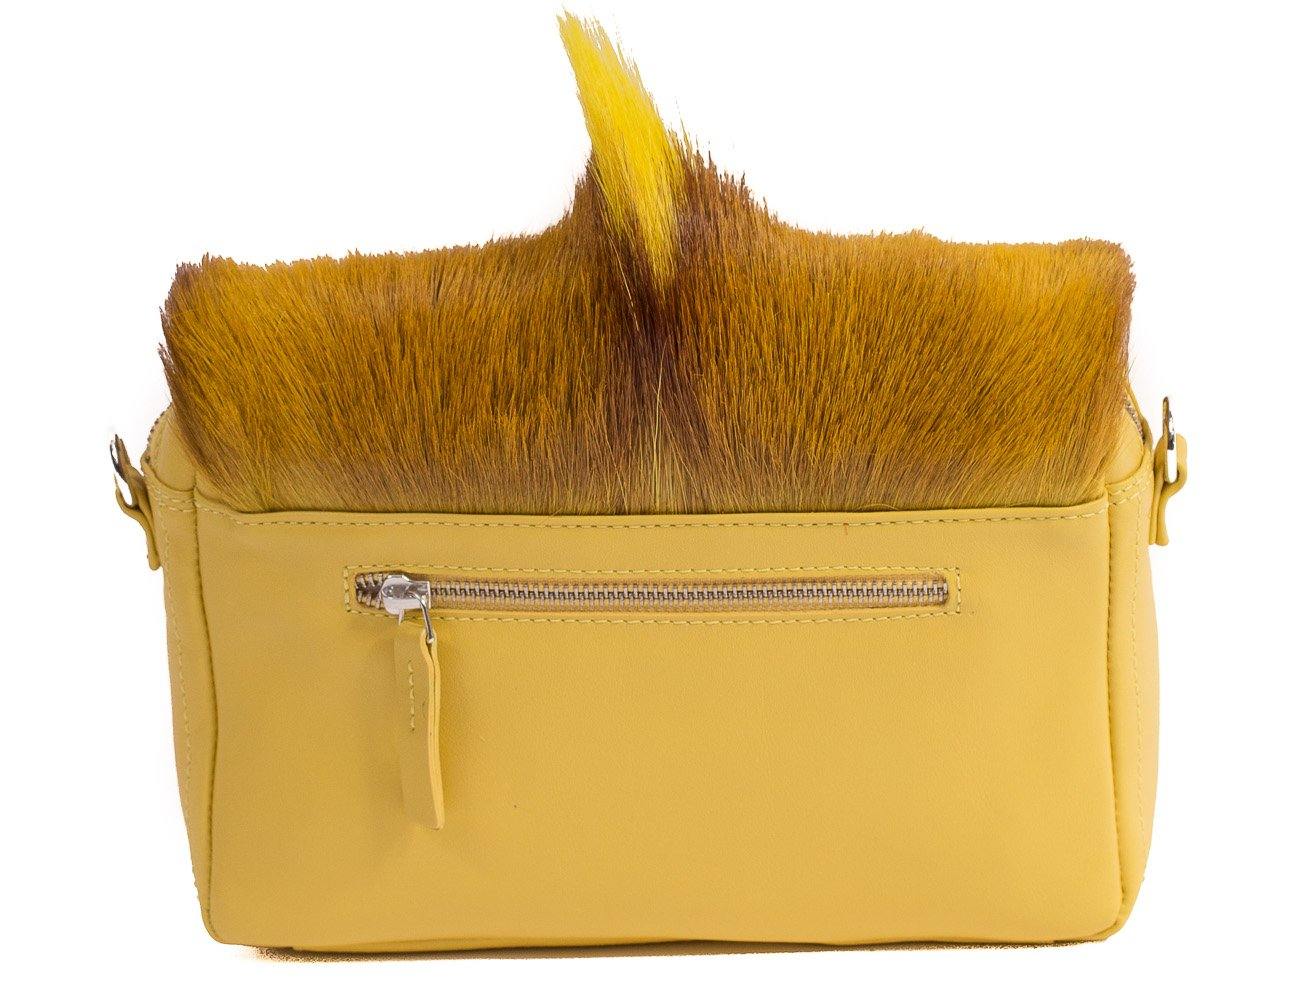 sherene melinda springbok hair-on-hide yellow leather shoulder bag Fan back